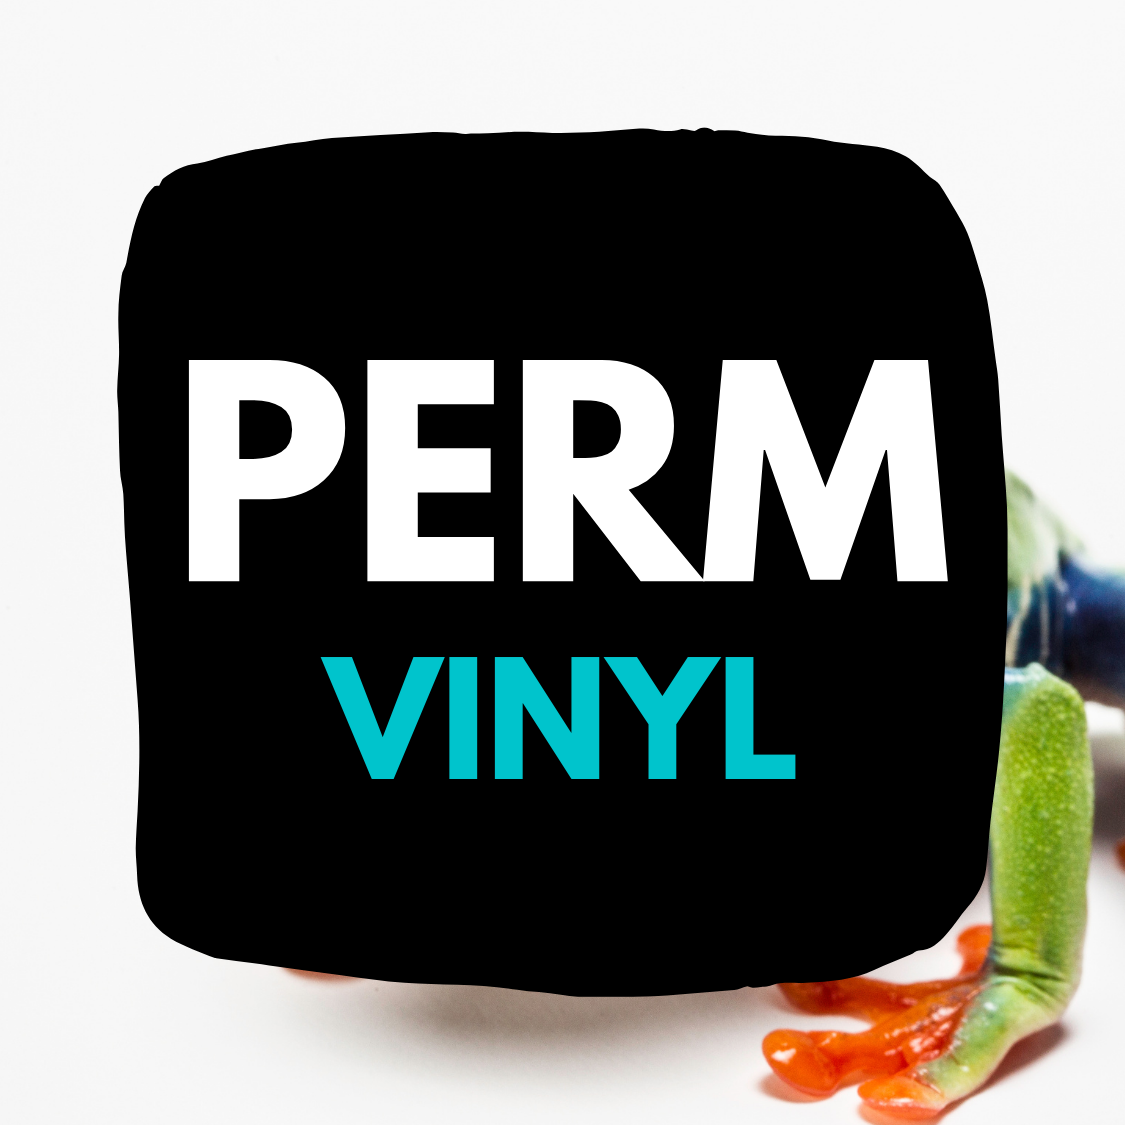 Permanent Vinyl